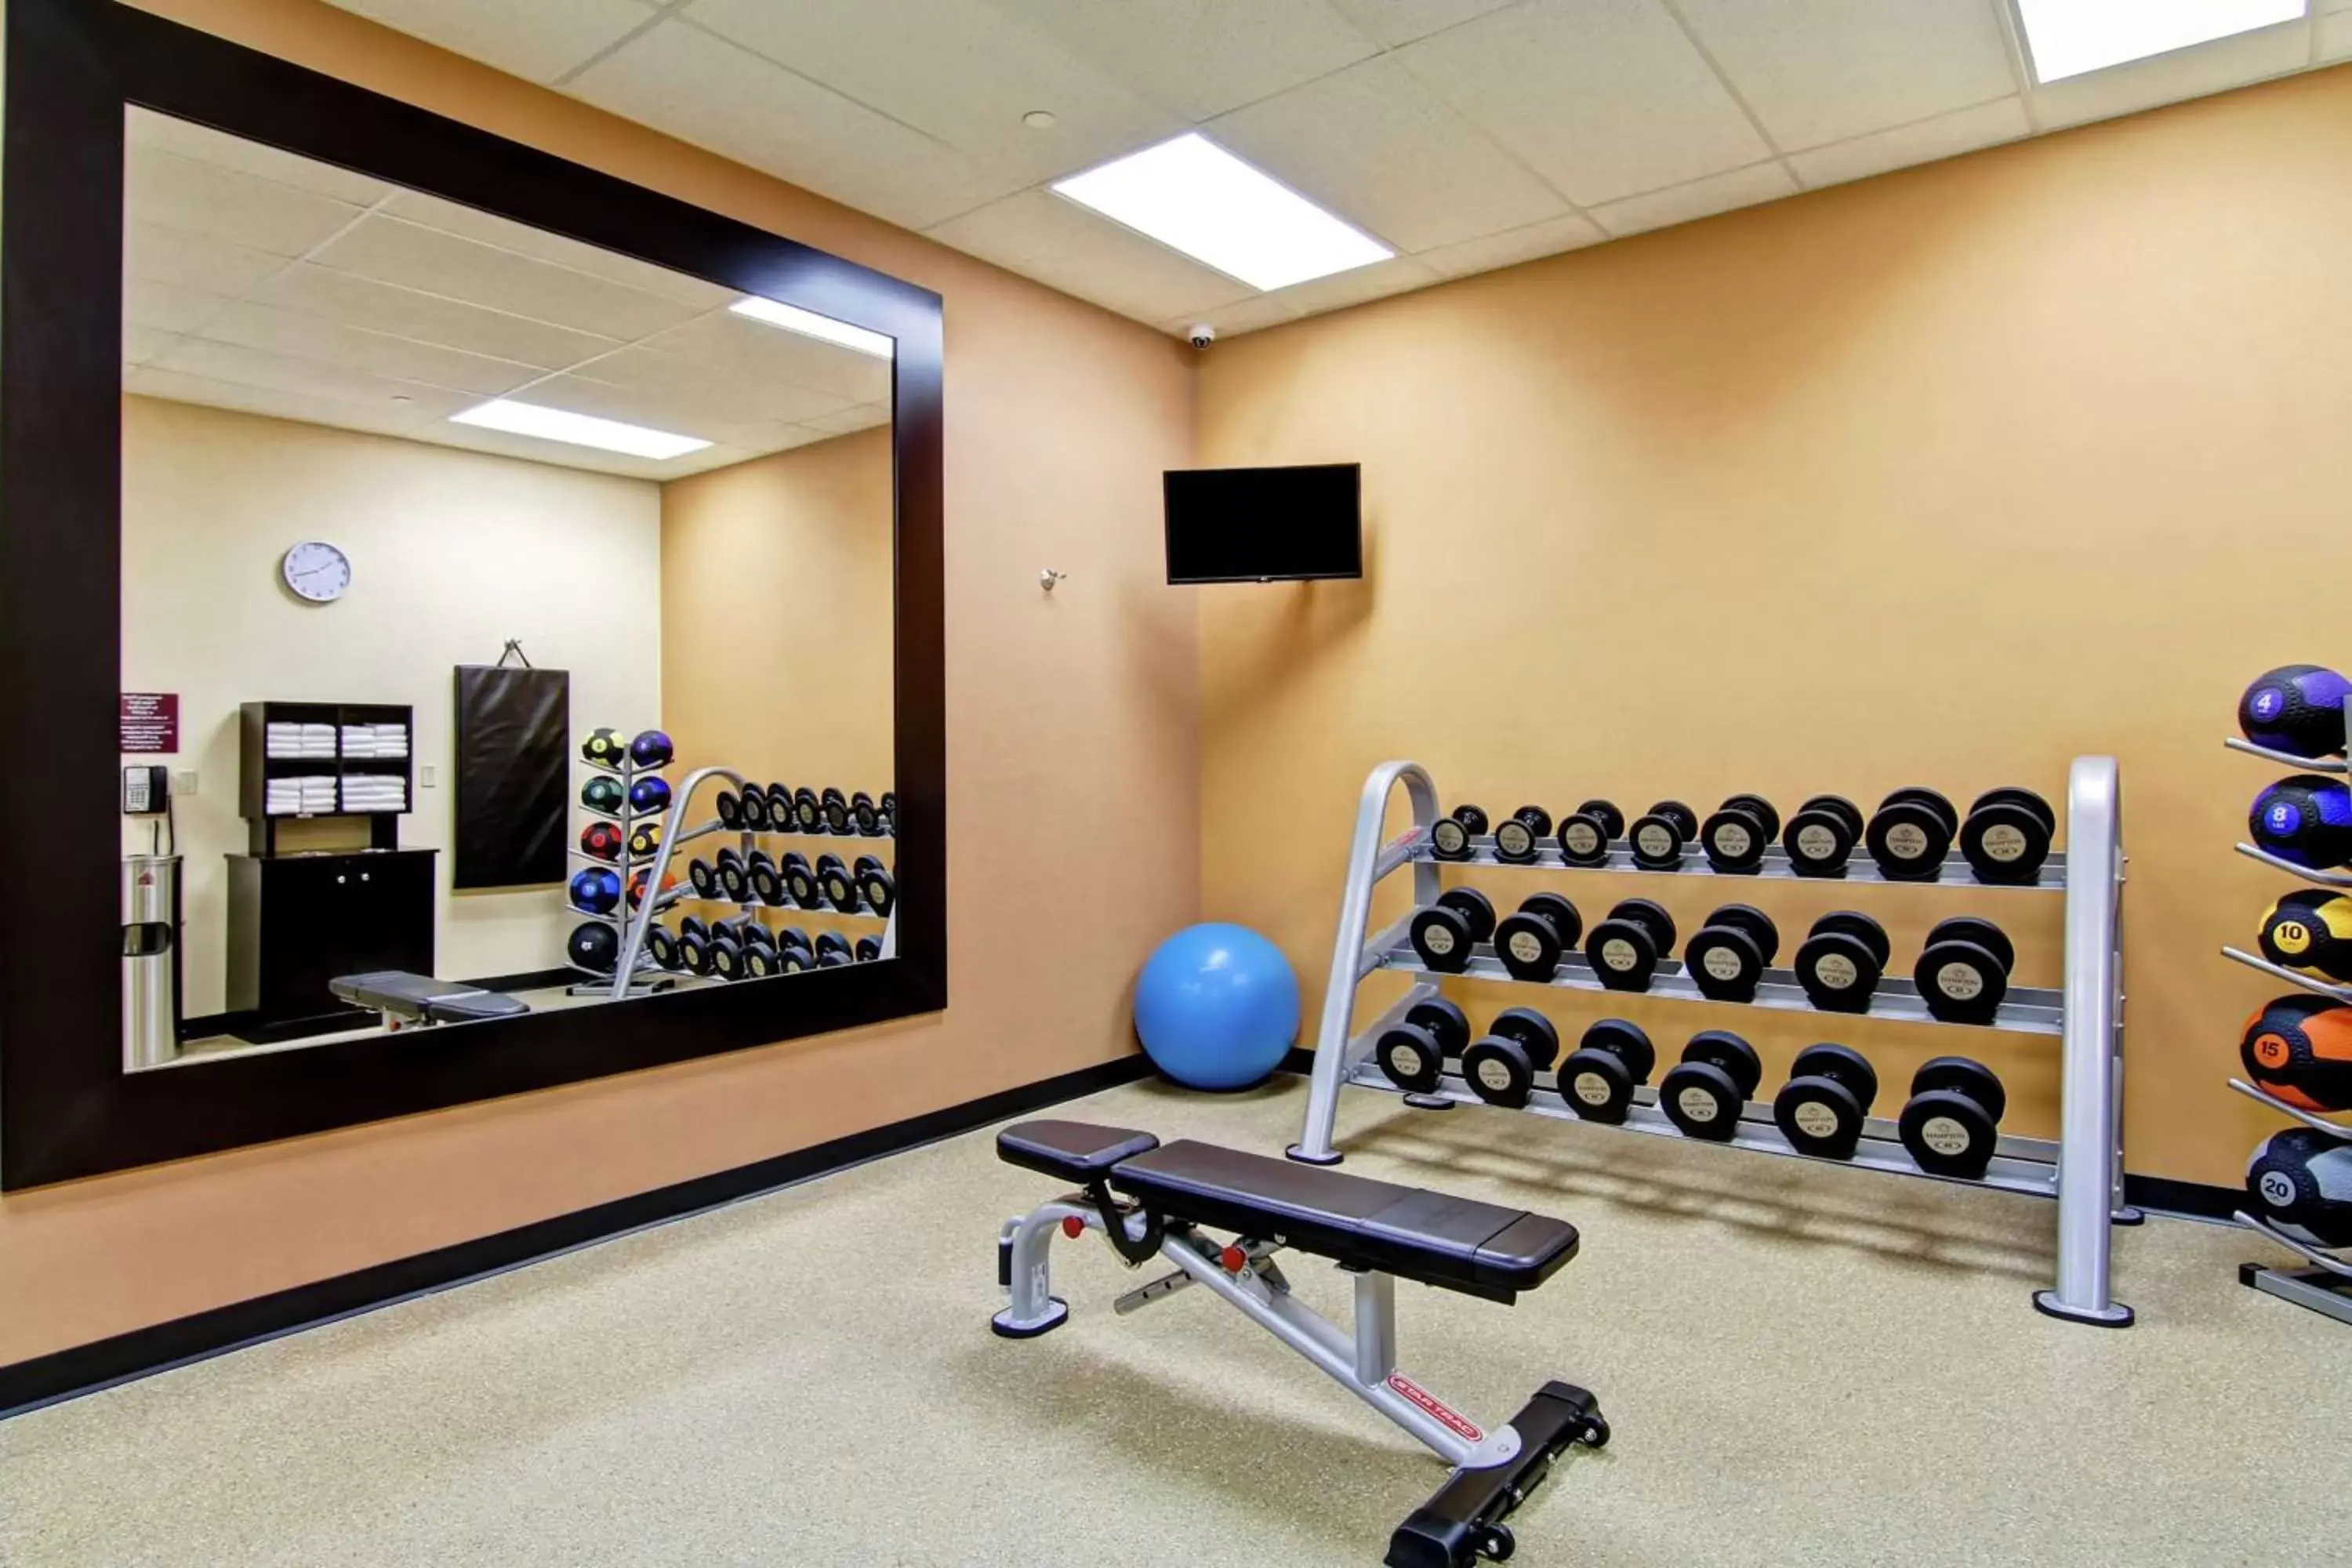 Fitness centre/facilities, Fitness Center/Facilities in Hilton Garden Inn Ottawa Airport